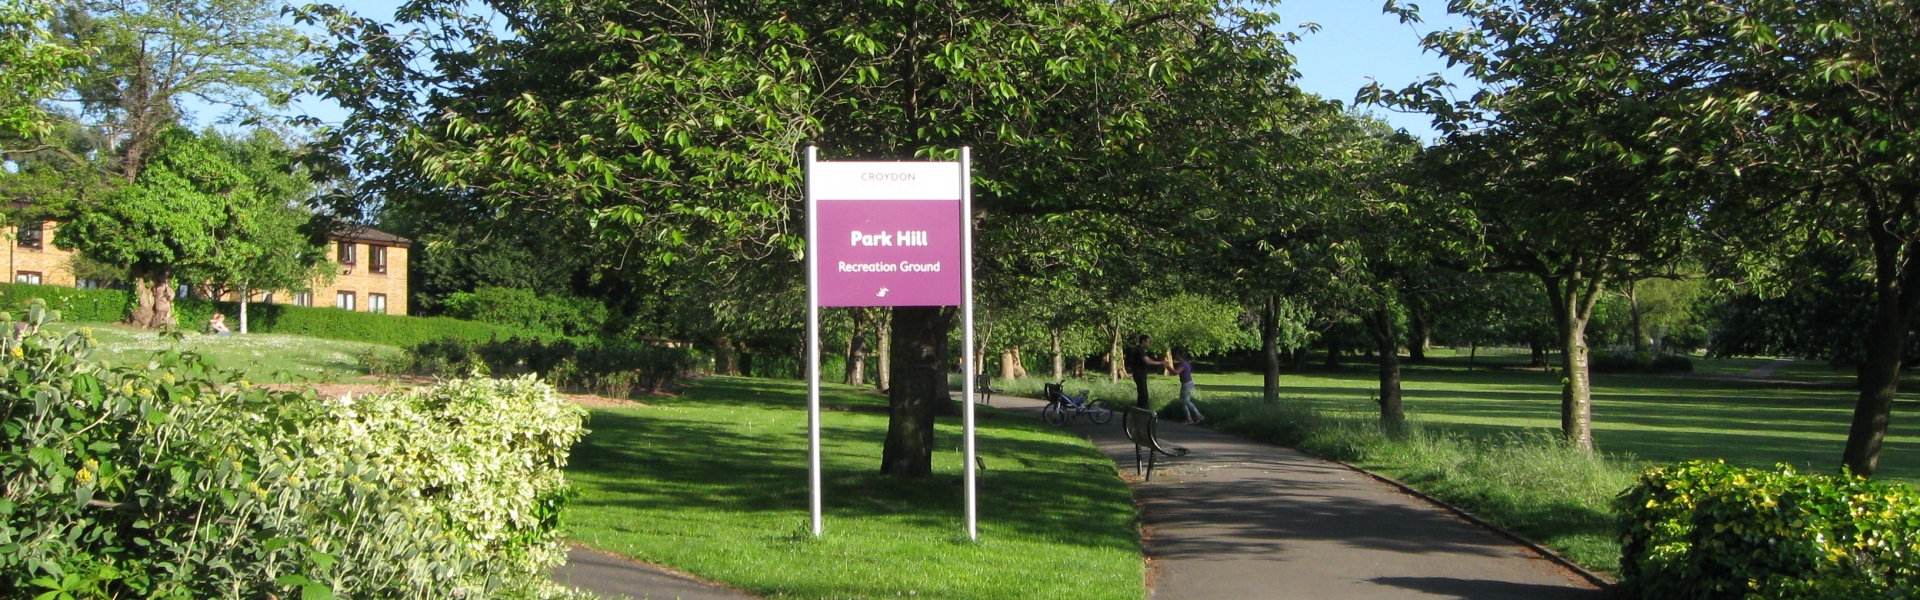 Park Hill a Recreation Ground